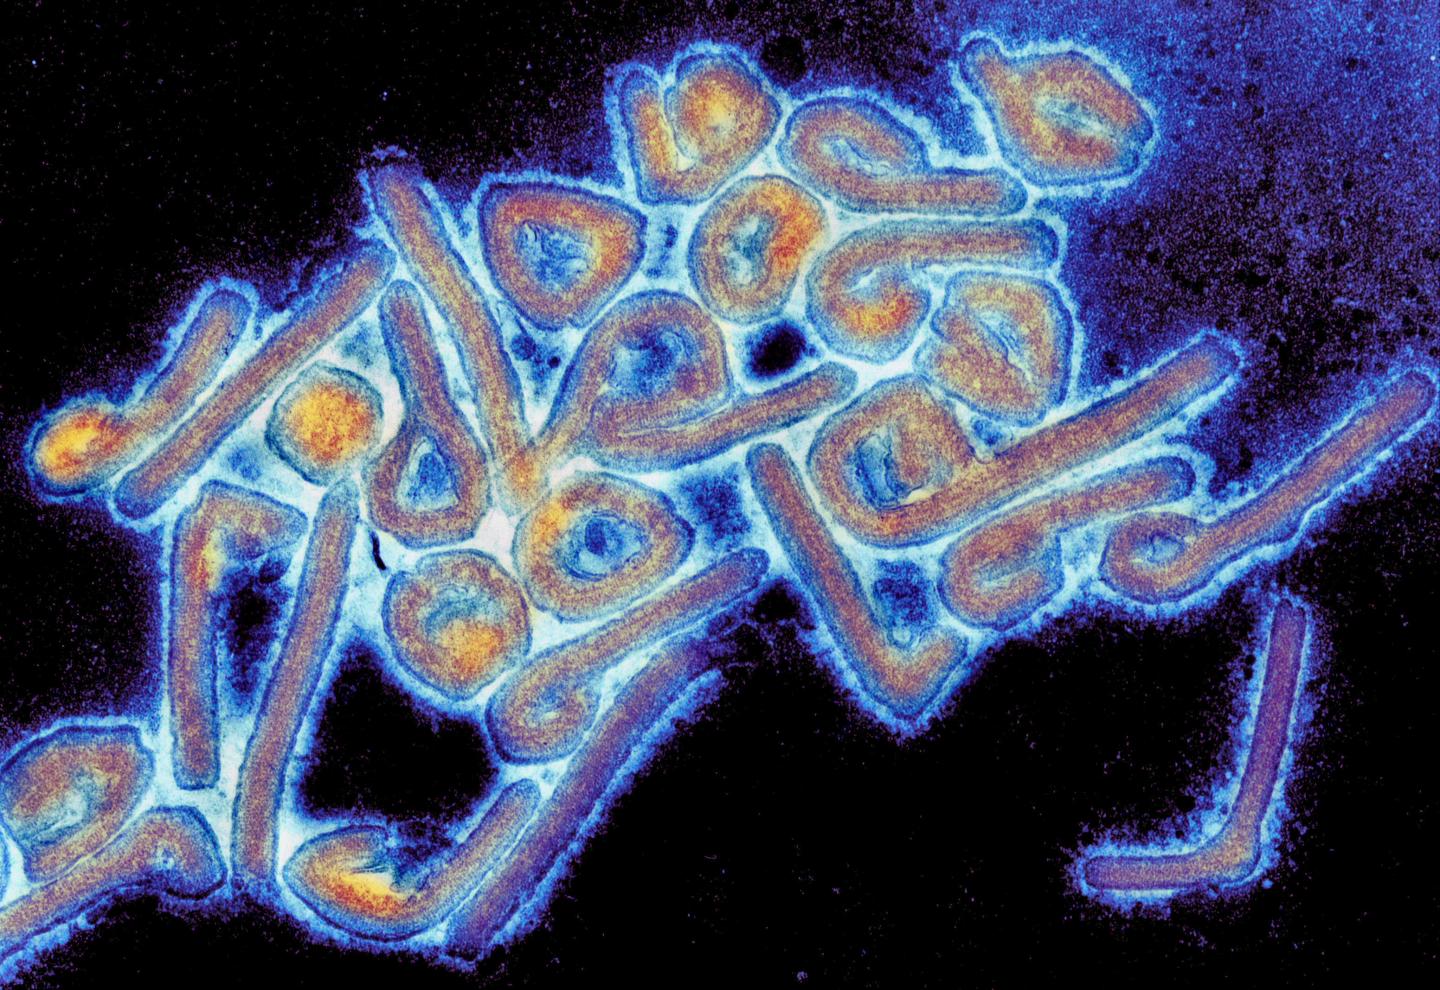 Micrograph of the Marburg virus. [The University of Texas Medical Branch at Galveston]